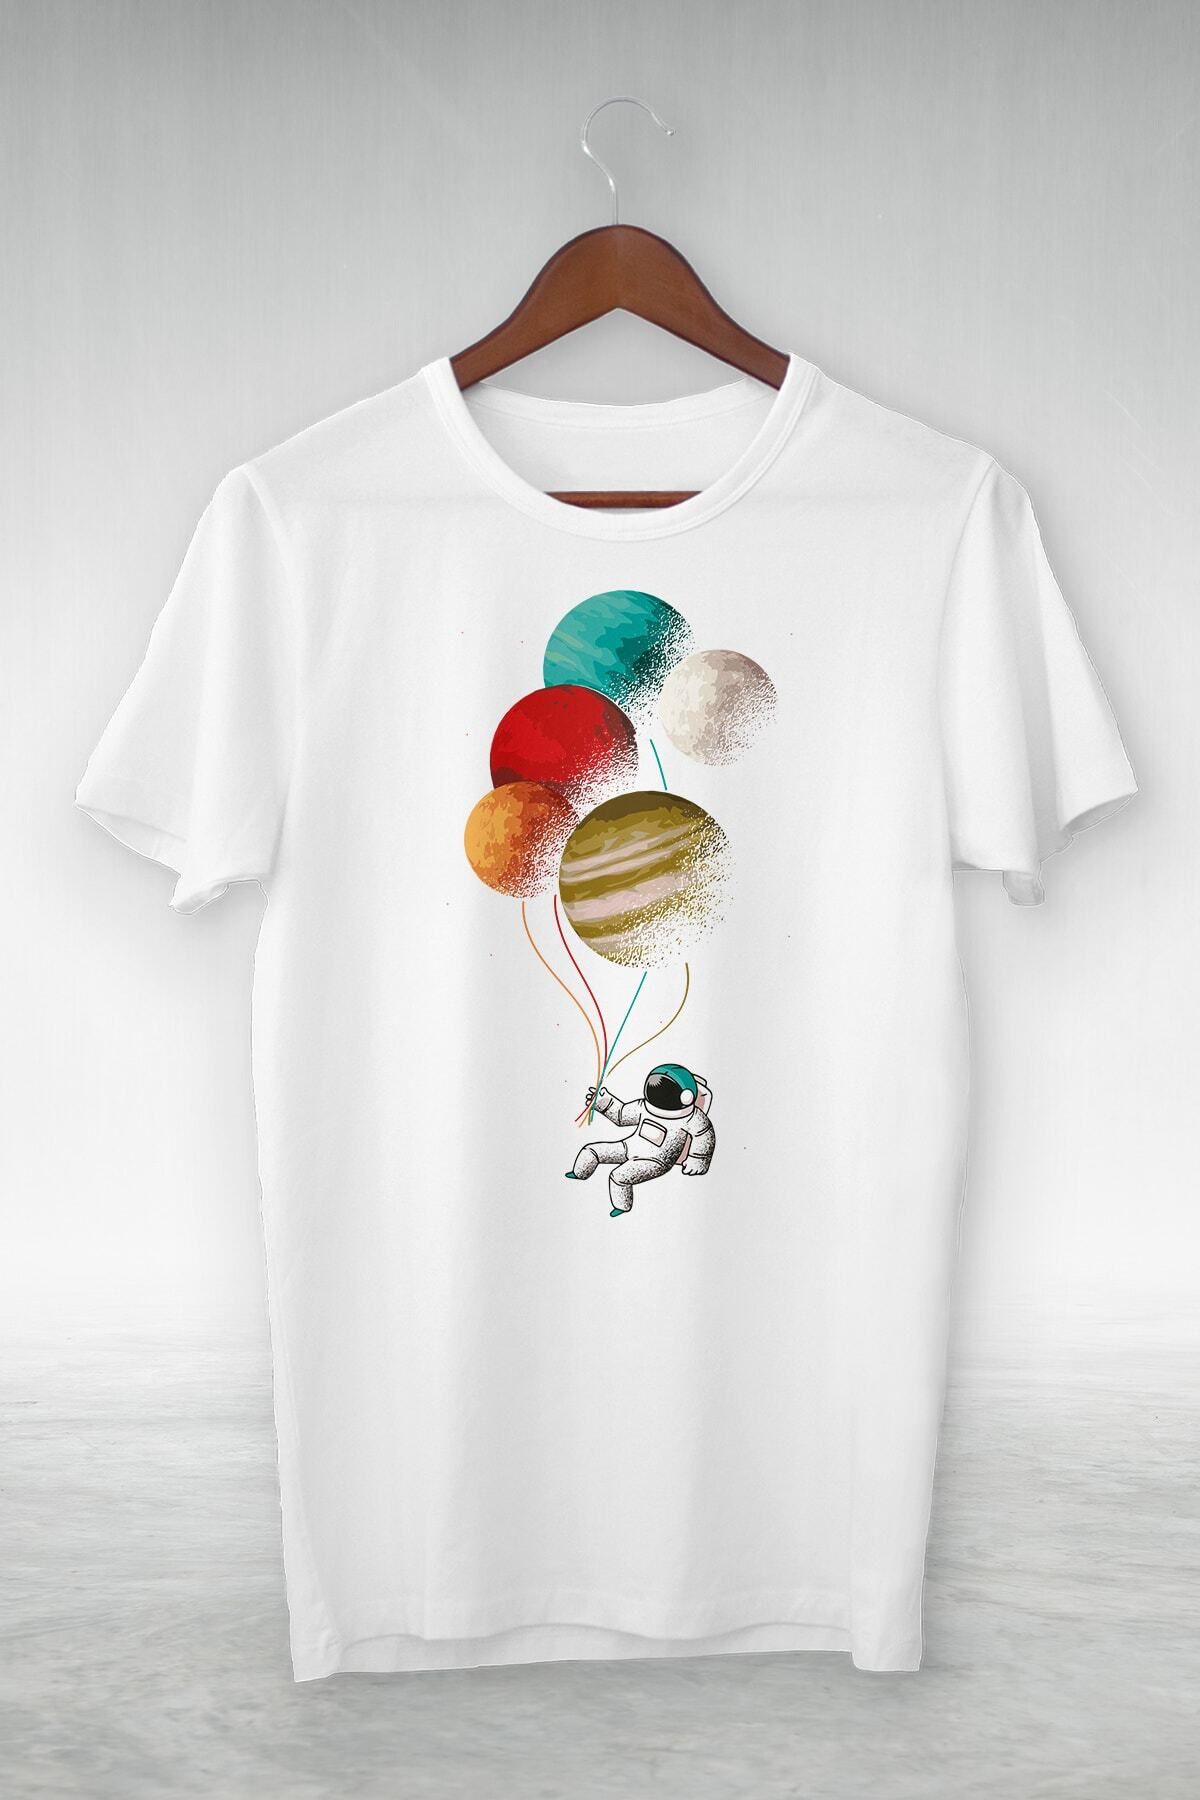 oneagılyazı Unisex Beyaz Balloon And Astronot From The Planet Illustrasyon Tshırt